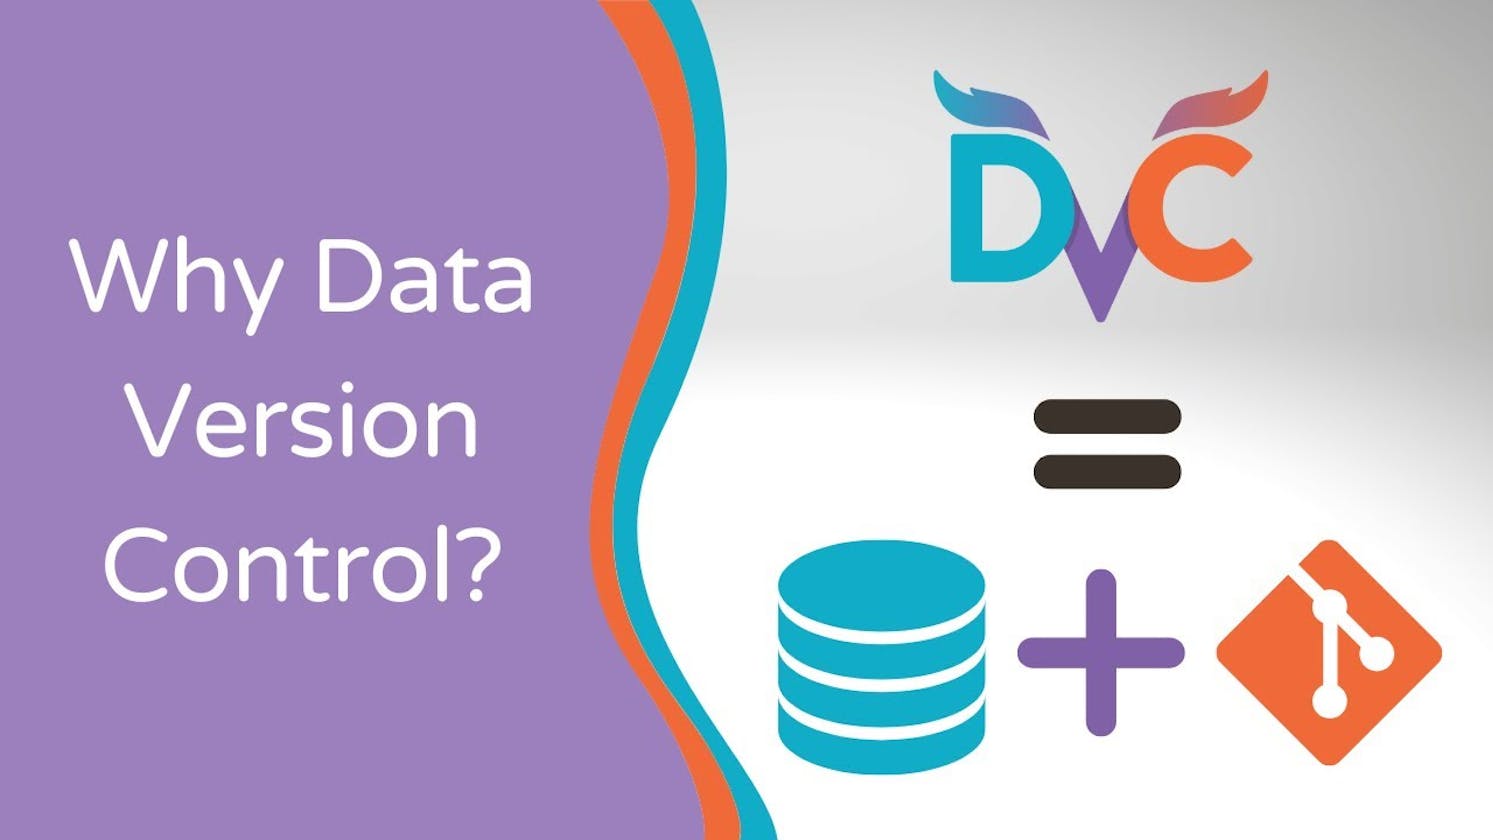 What Data Version Control - dvc?